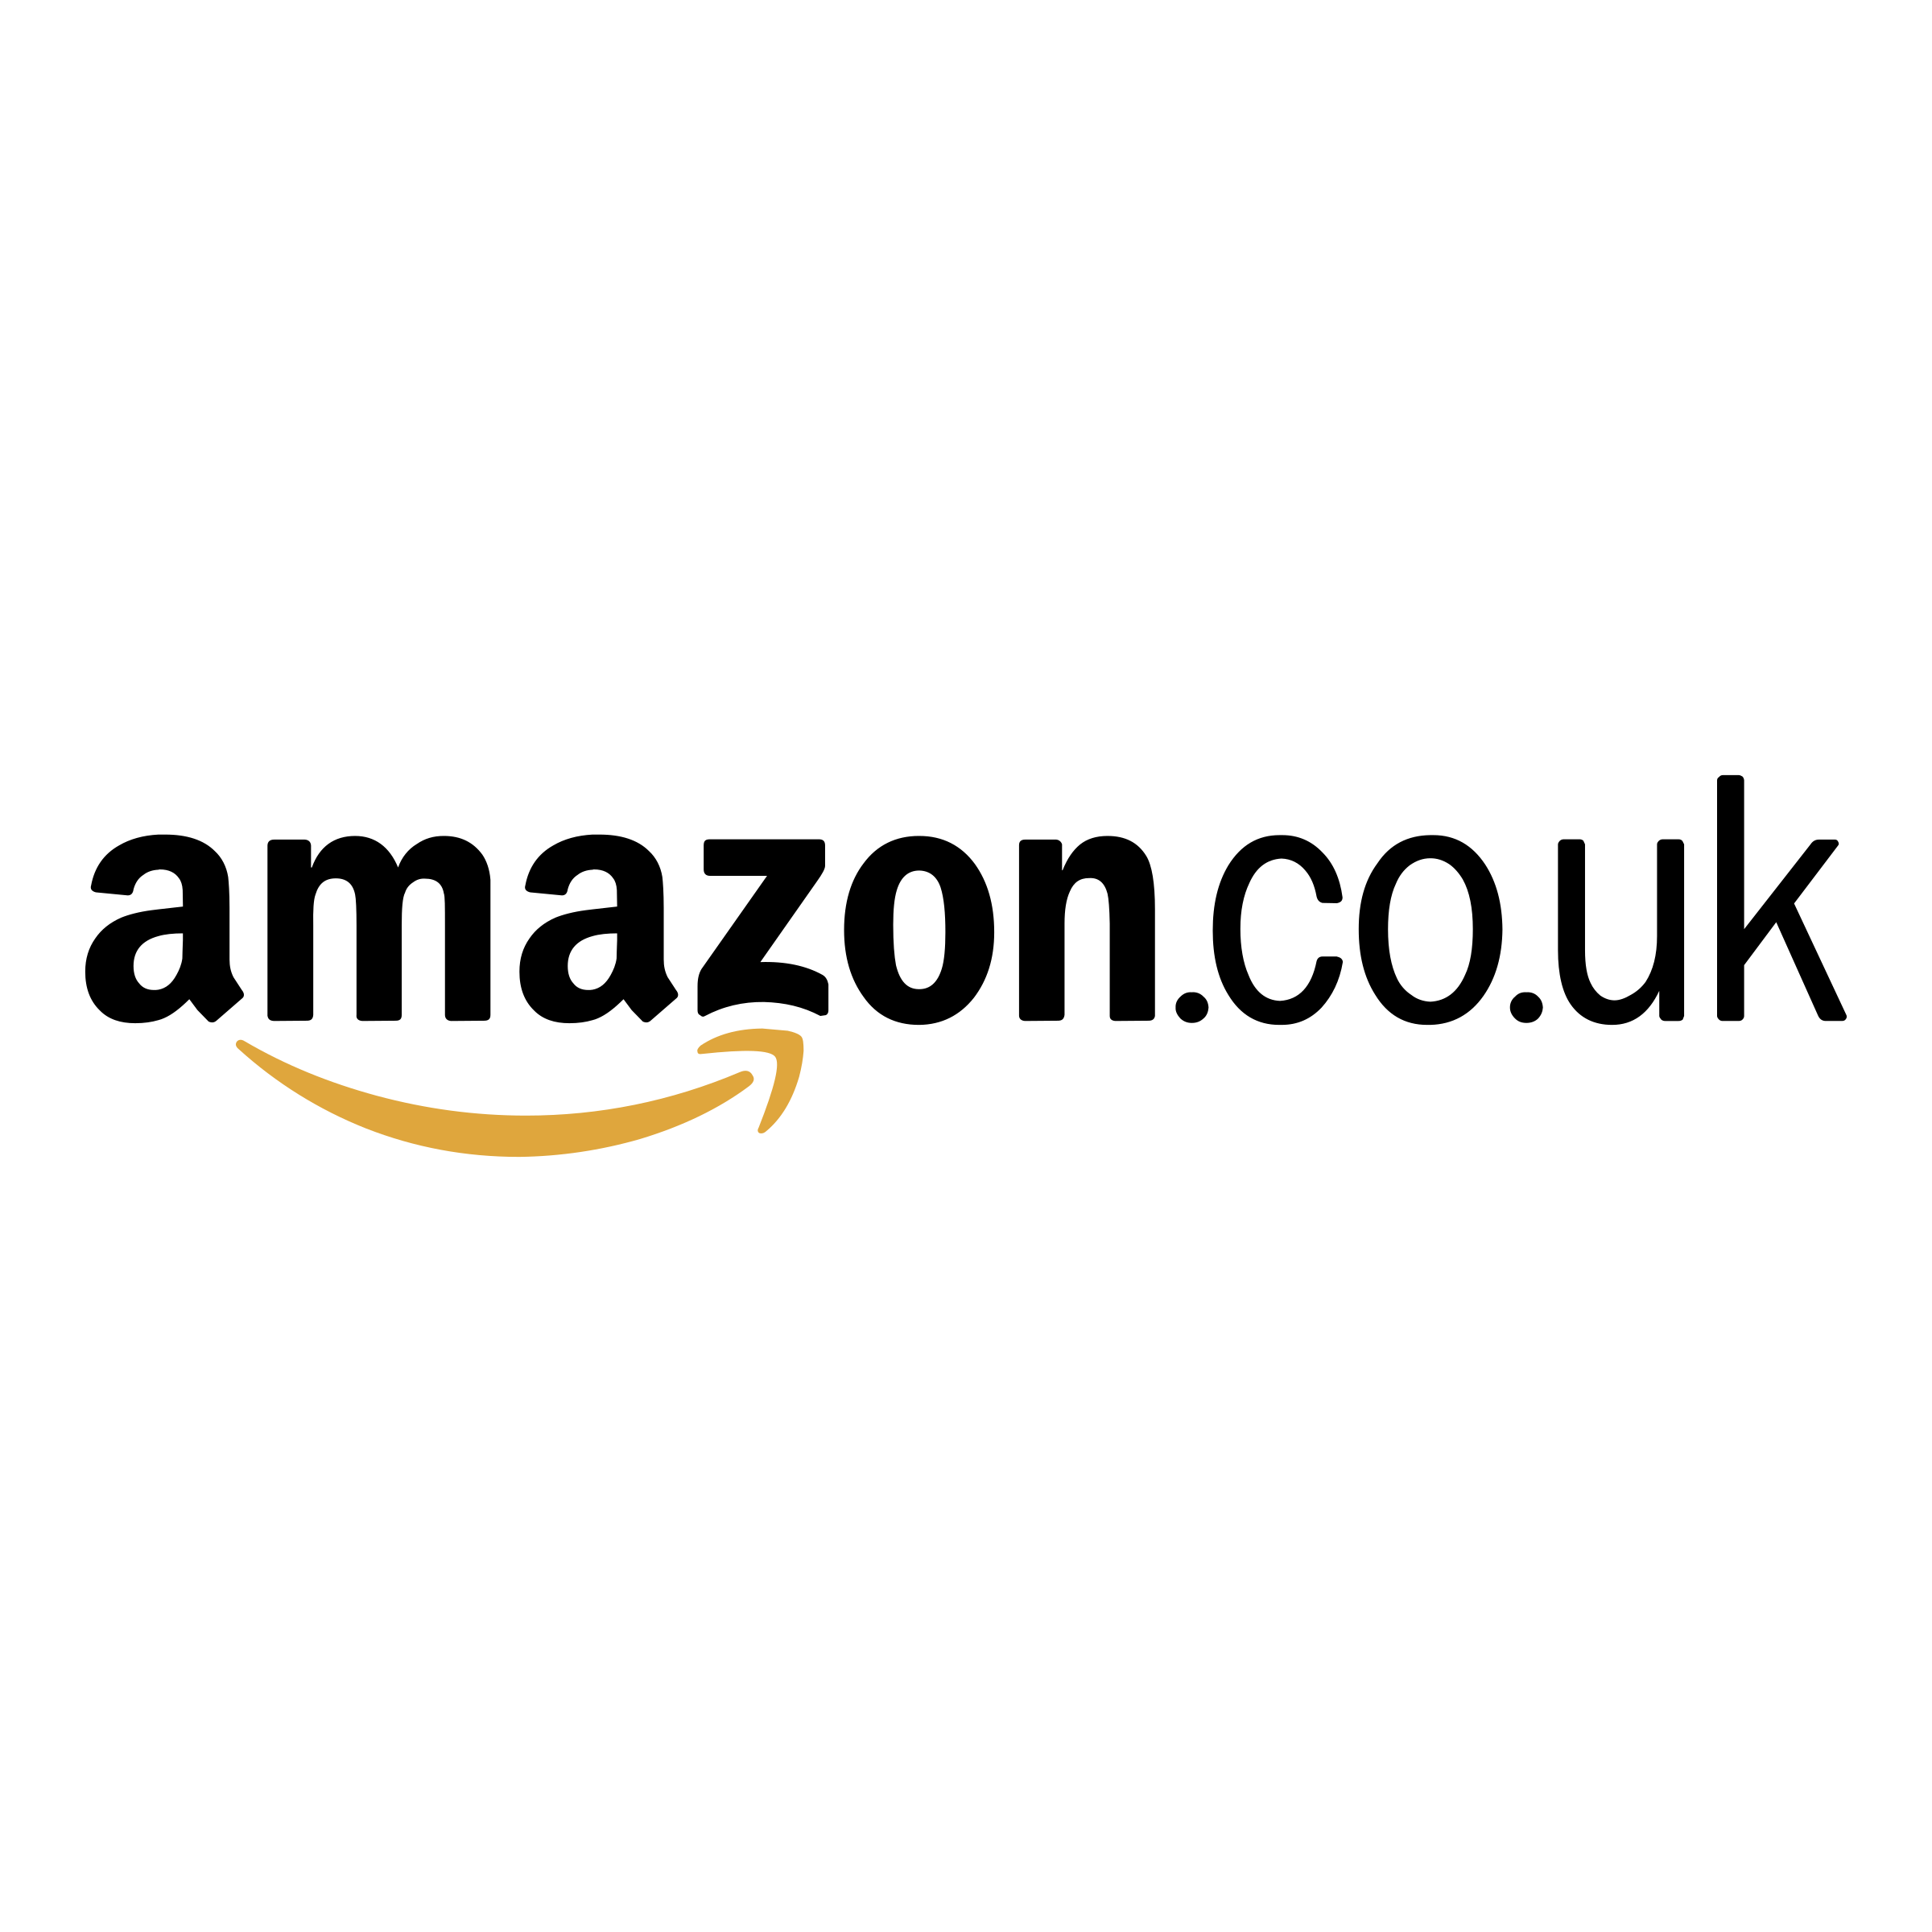 replica designer - Amazon.co.uk